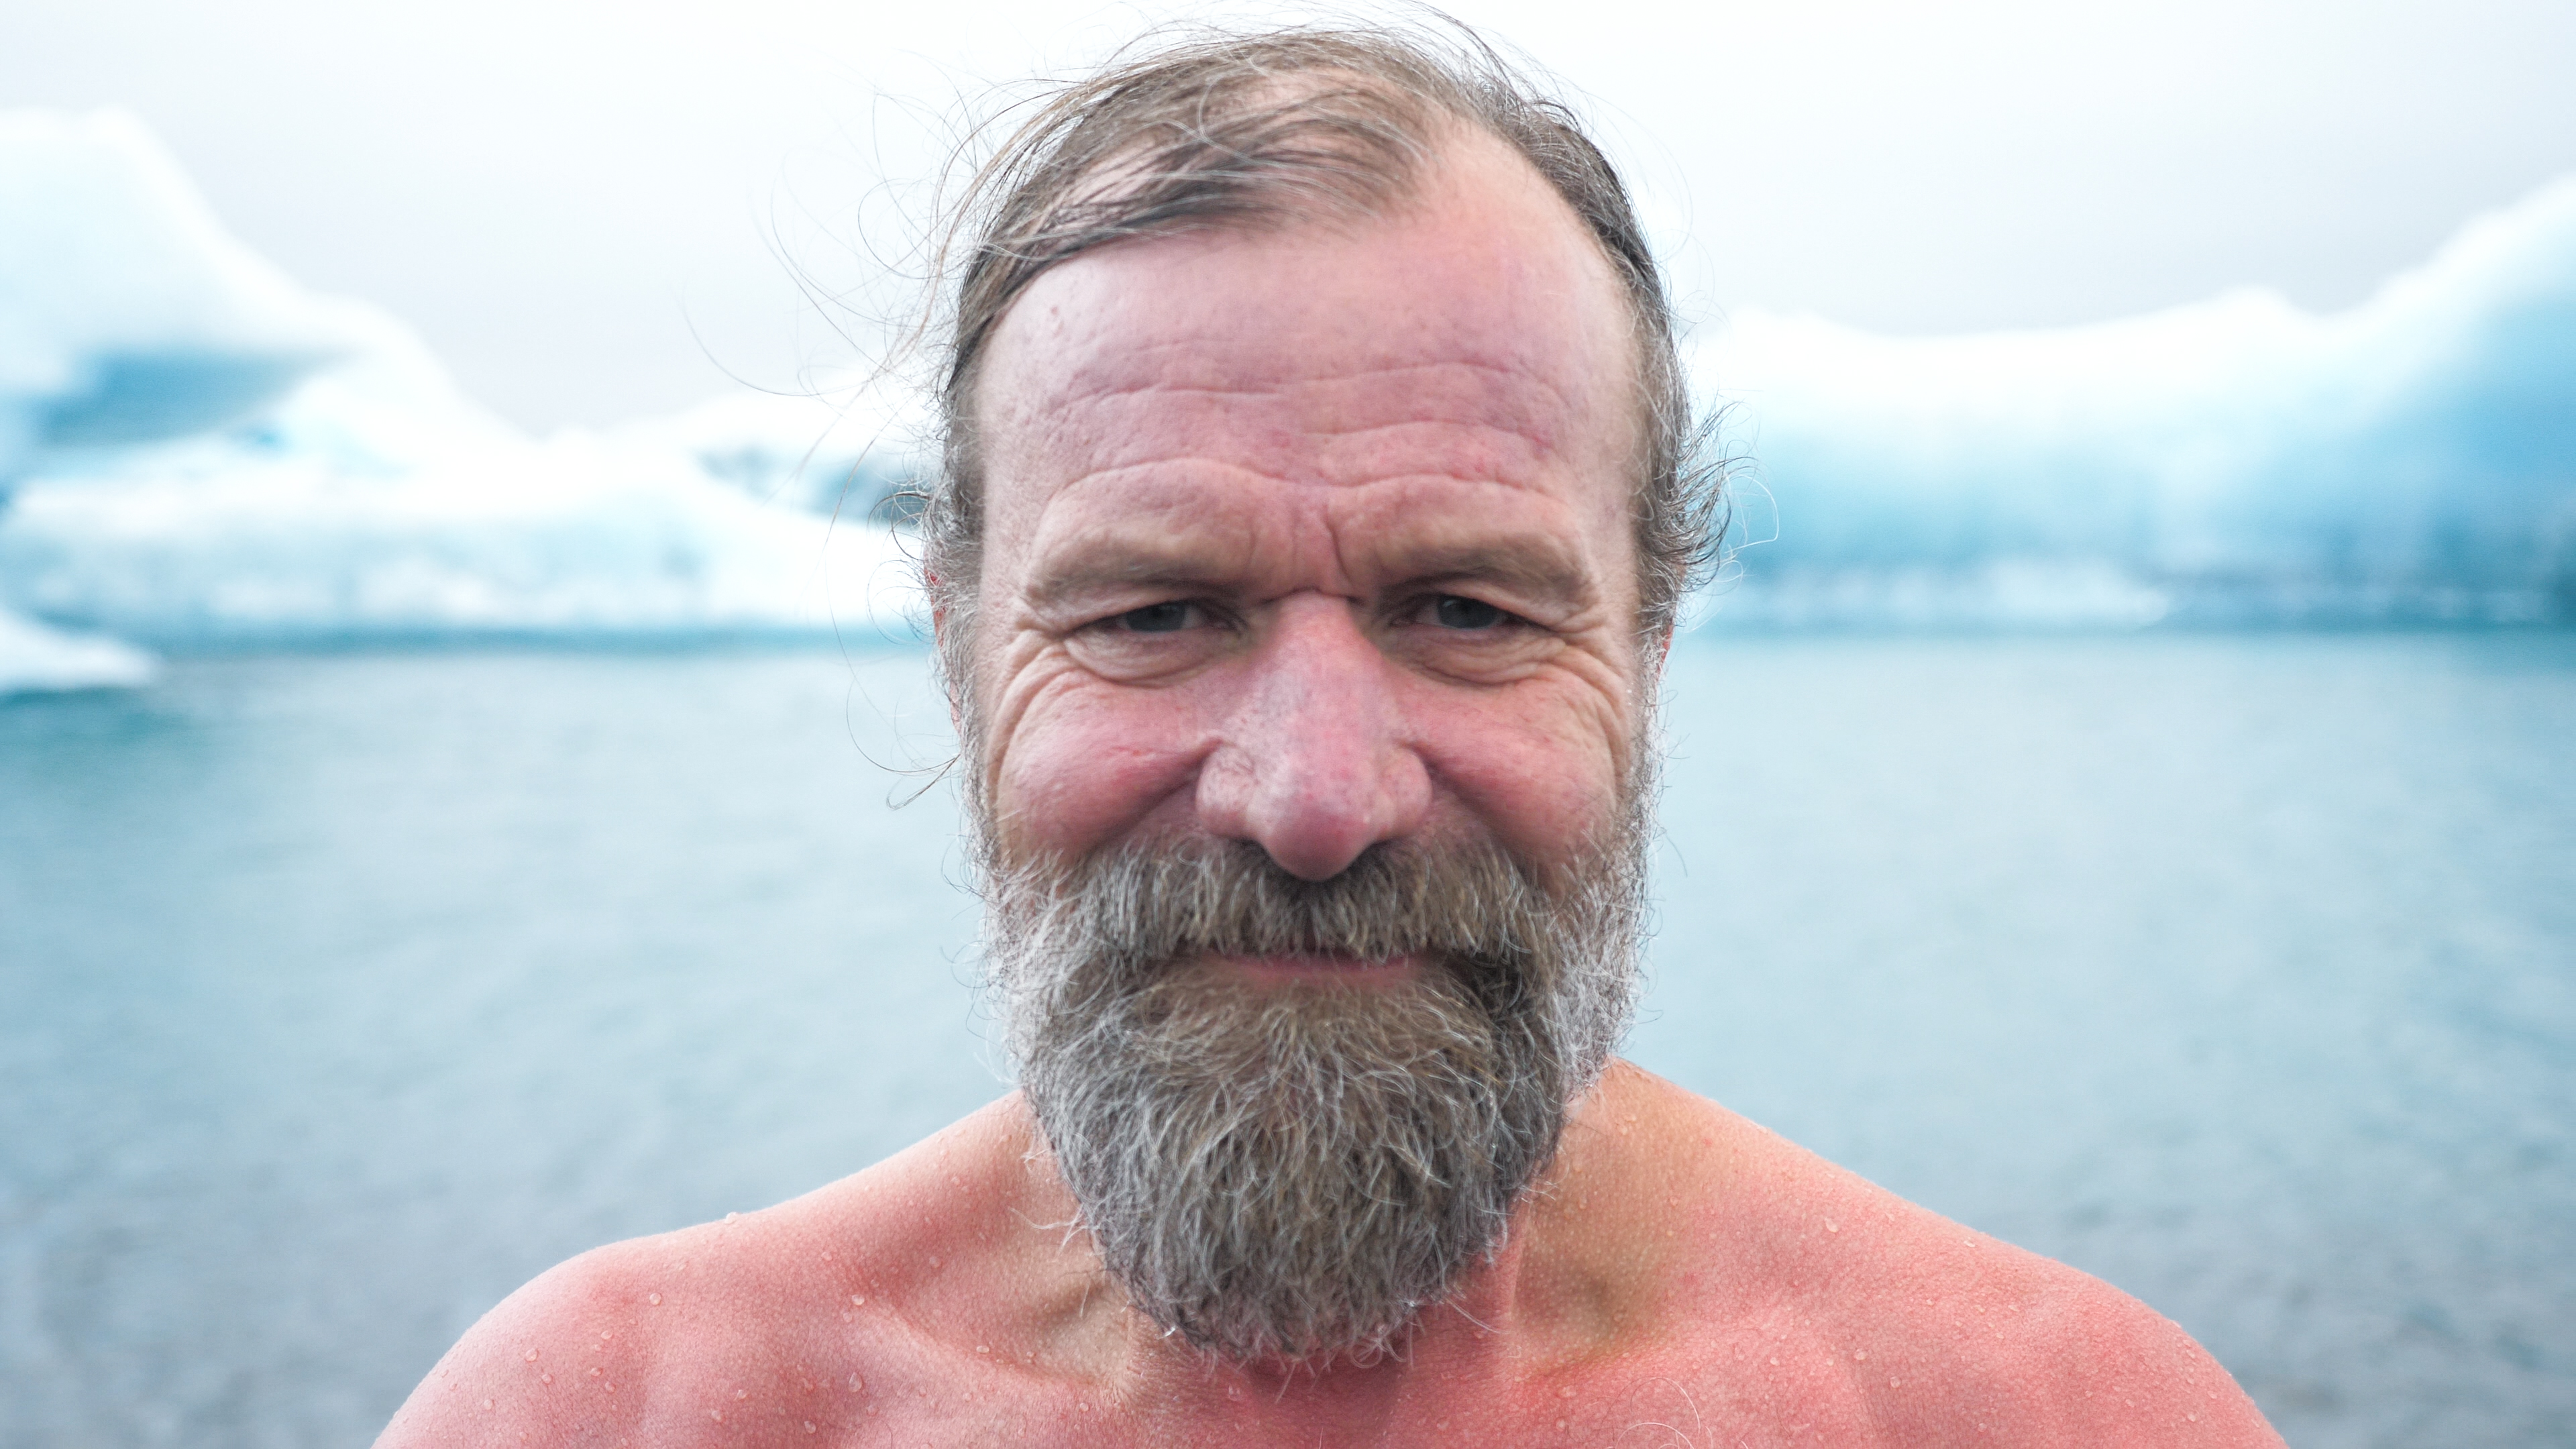 Wim Hof: The Iceman  Guinness World Records